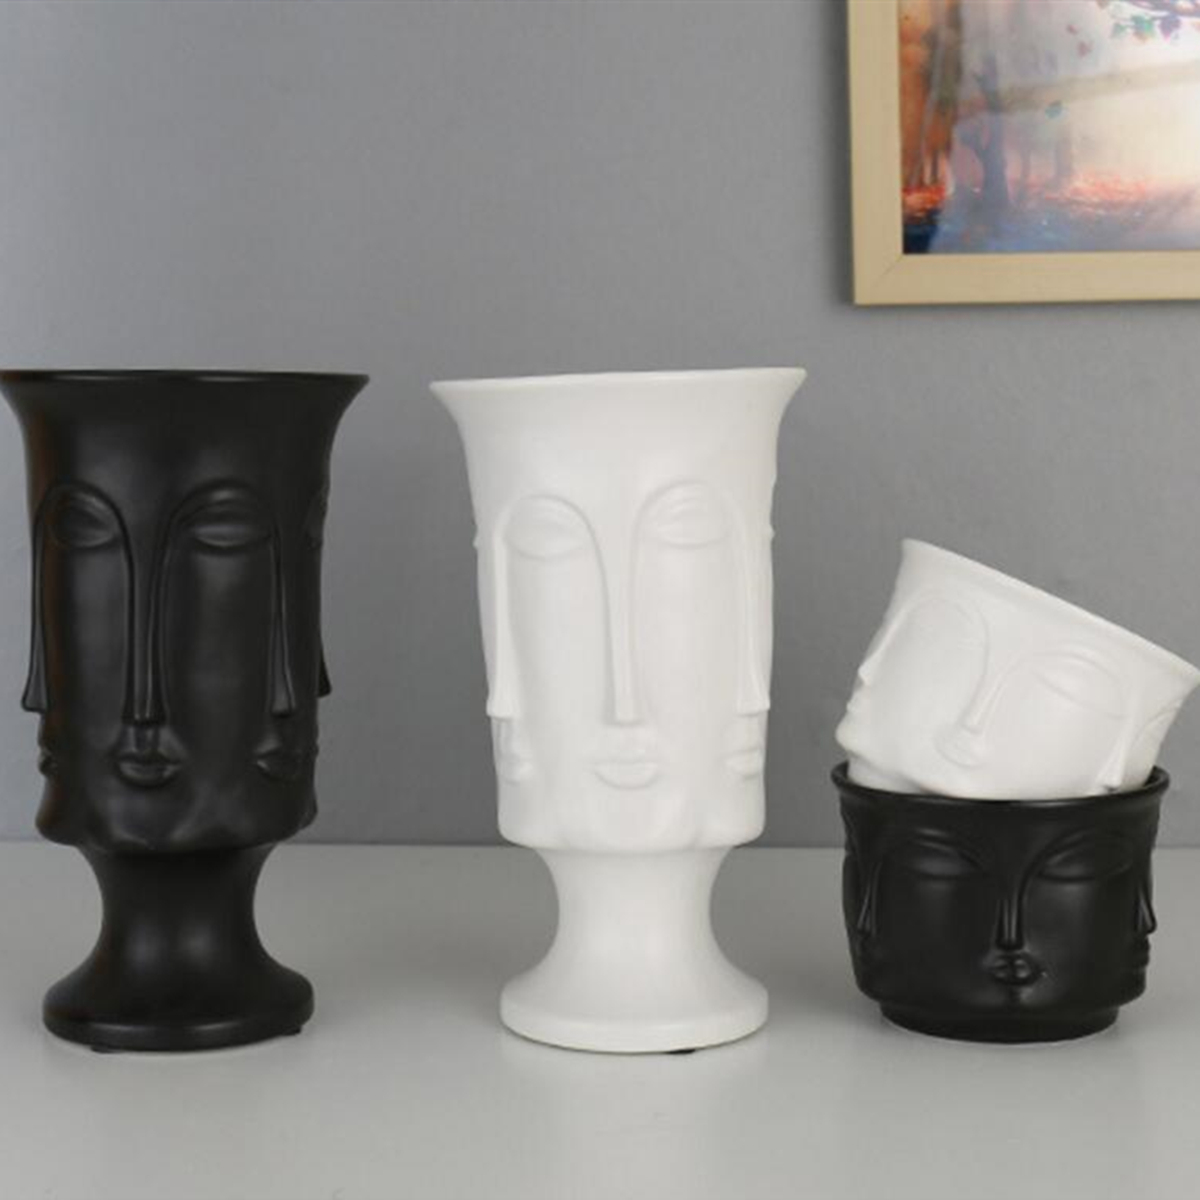 Minimalist-Artificial-Flower-Ceramic-Human-Face-Creative-Vase-Display-Room-Decorations-1473220-7